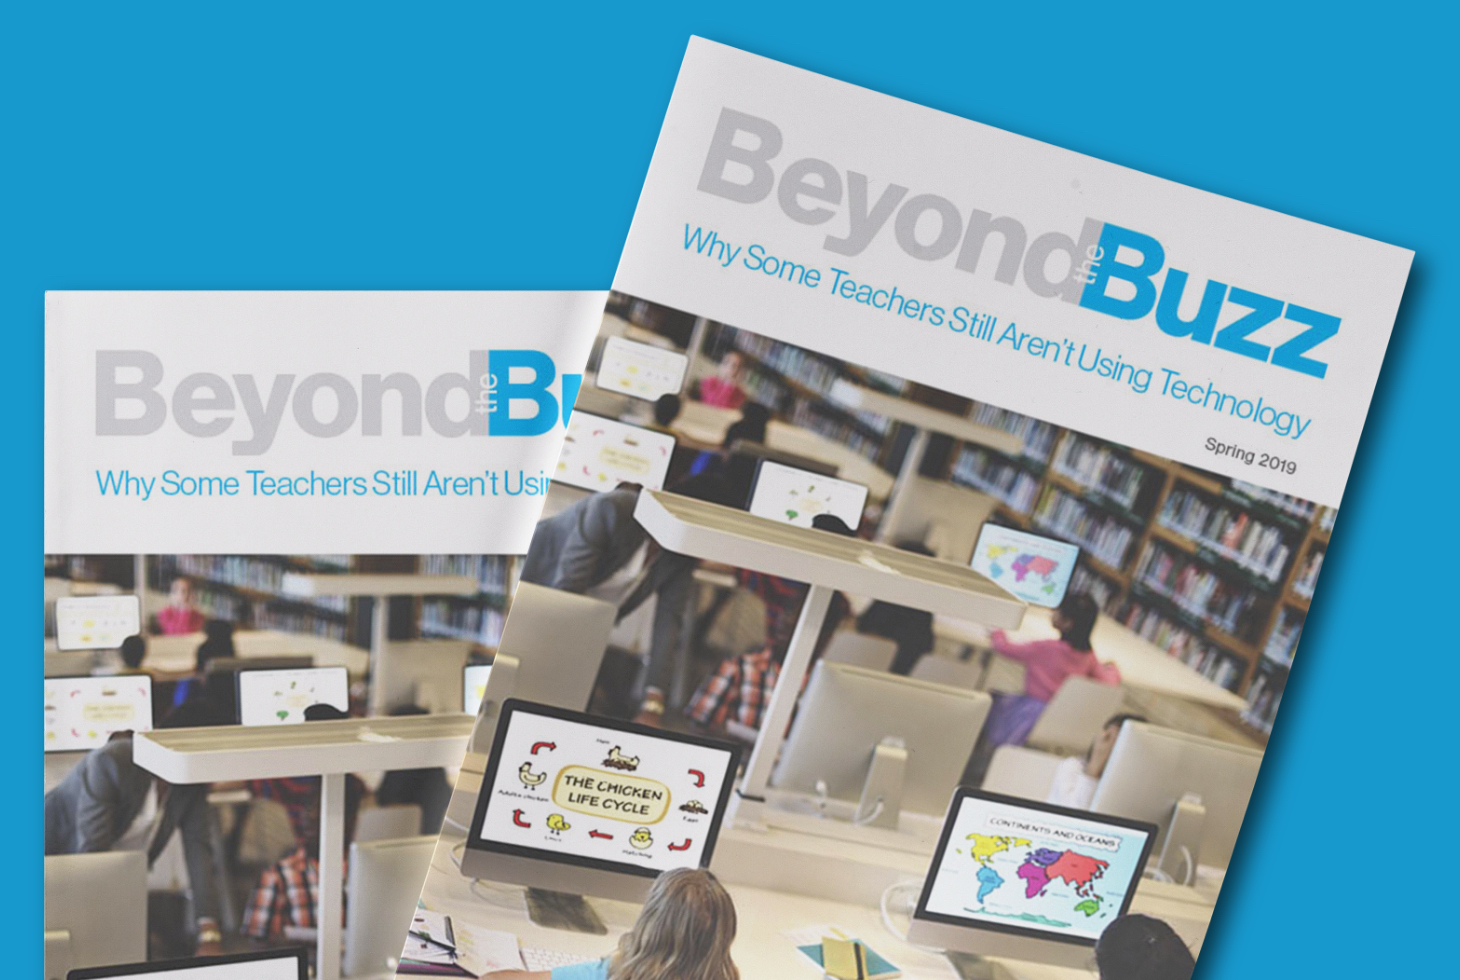 "beyond the buzz" publication